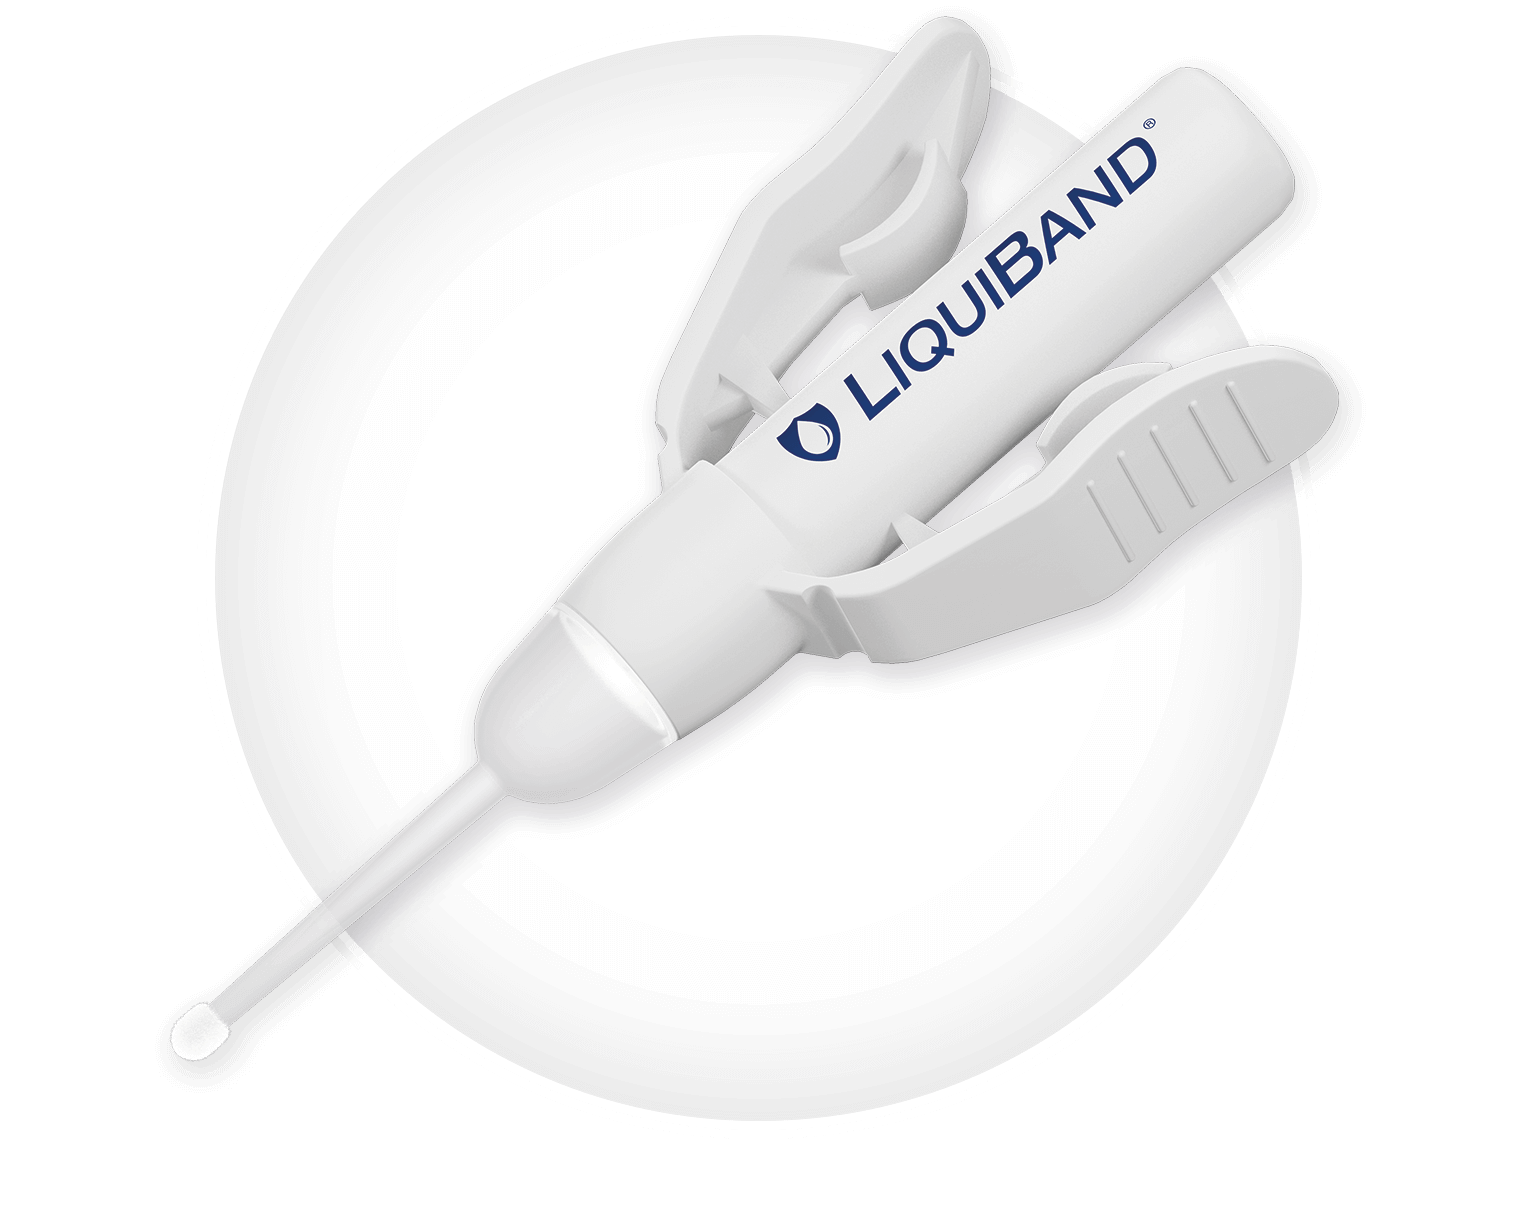 LiquiBand® Flow Control